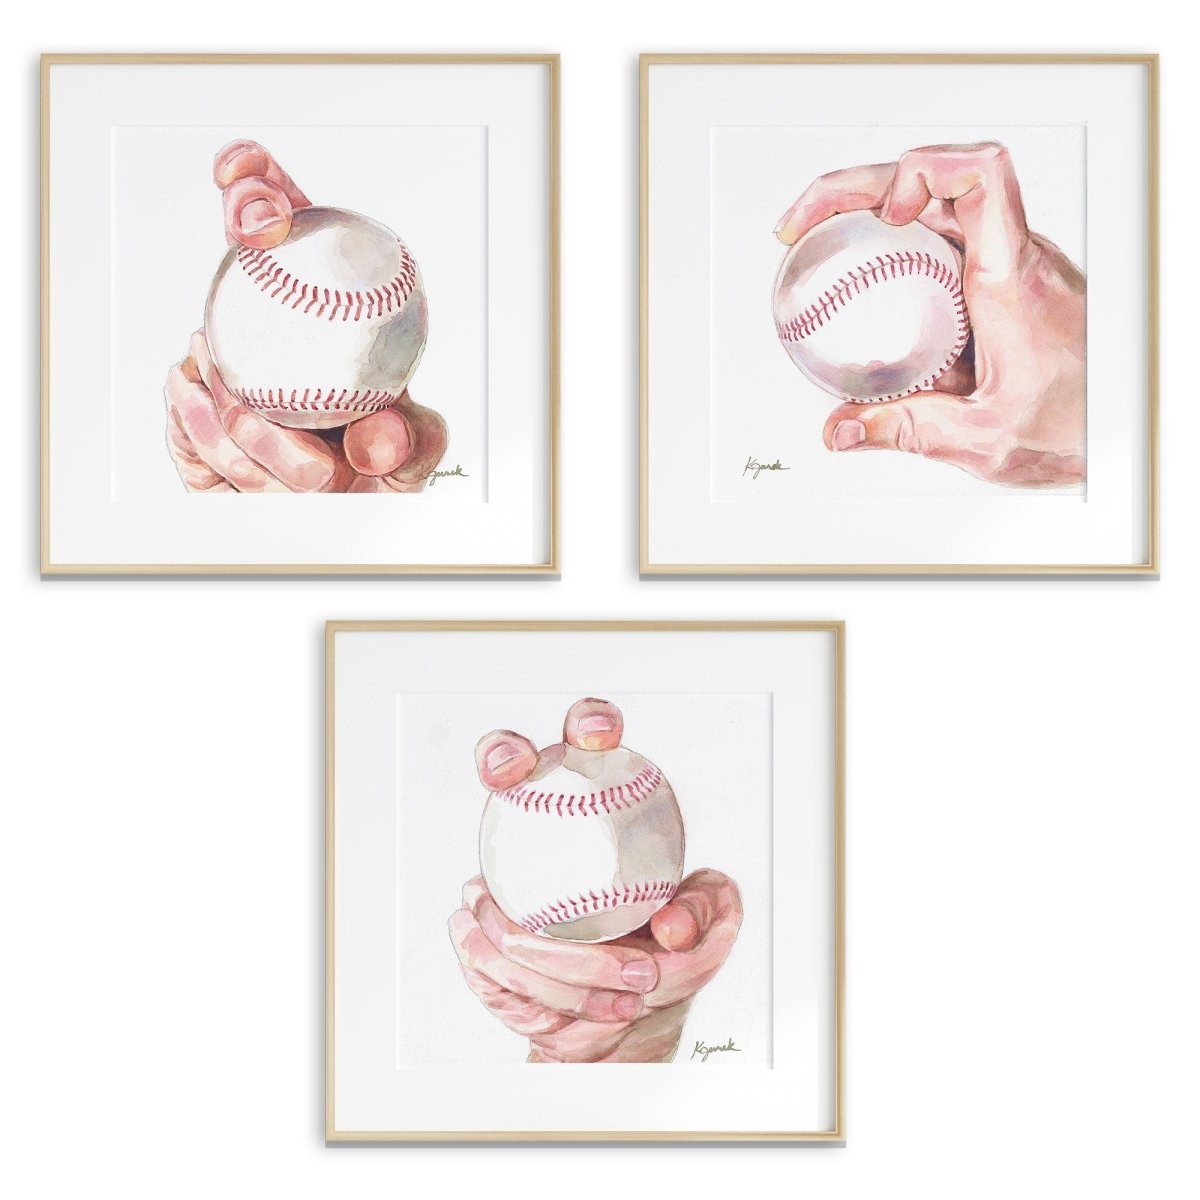 Set of Curve Ball Pitch Grip Baseball Prints